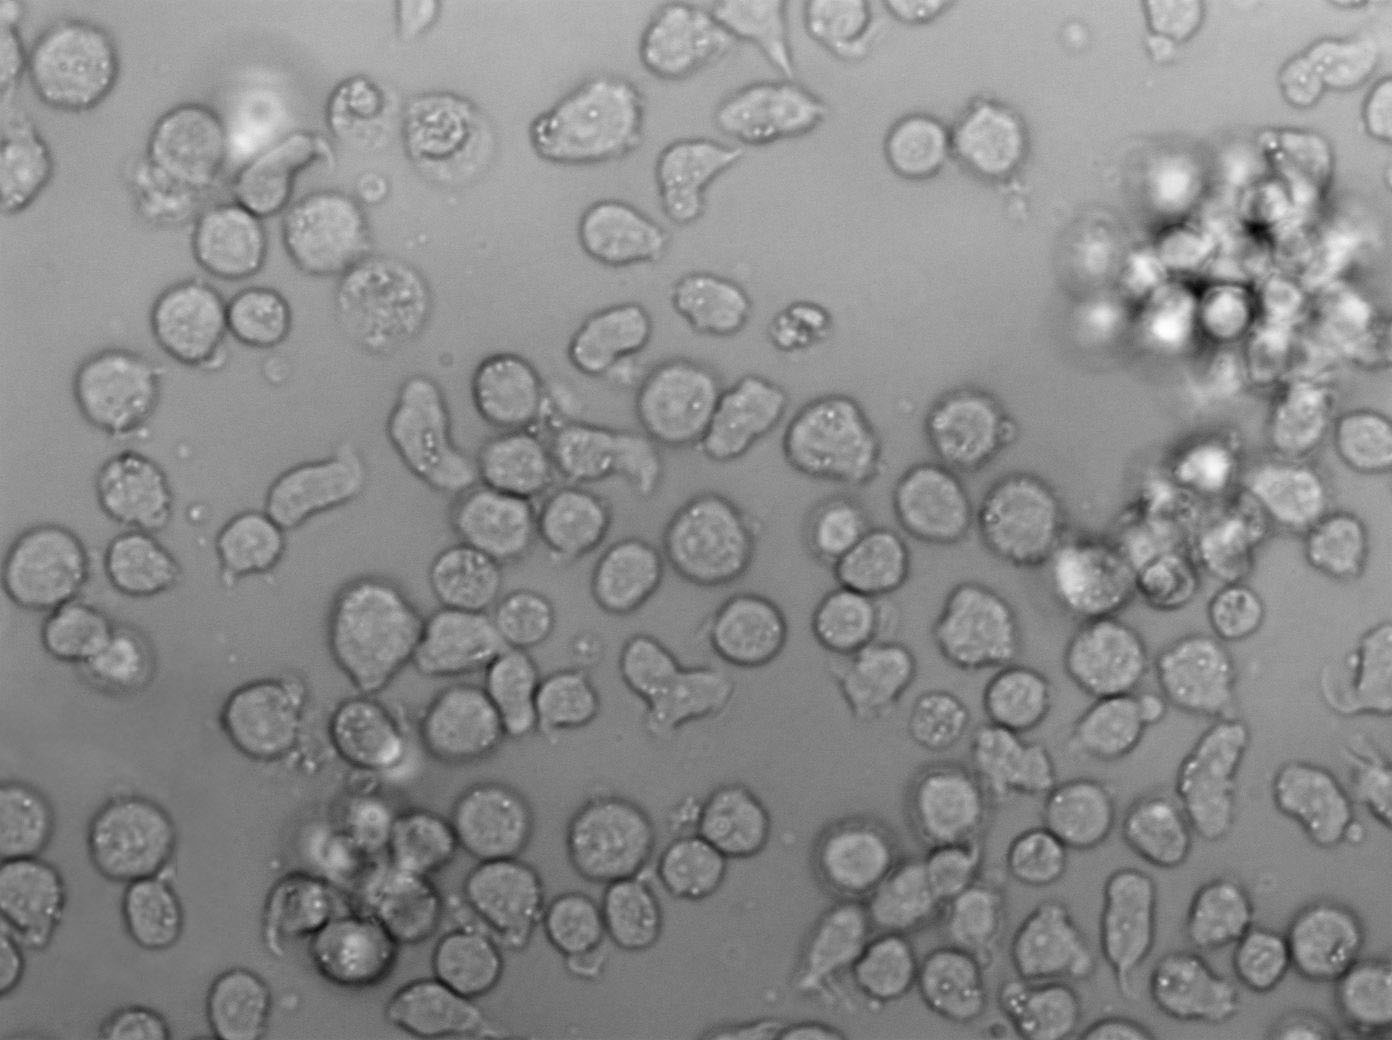 SU-DHL-4 Cell|人弥漫性组织淋巴瘤细胞